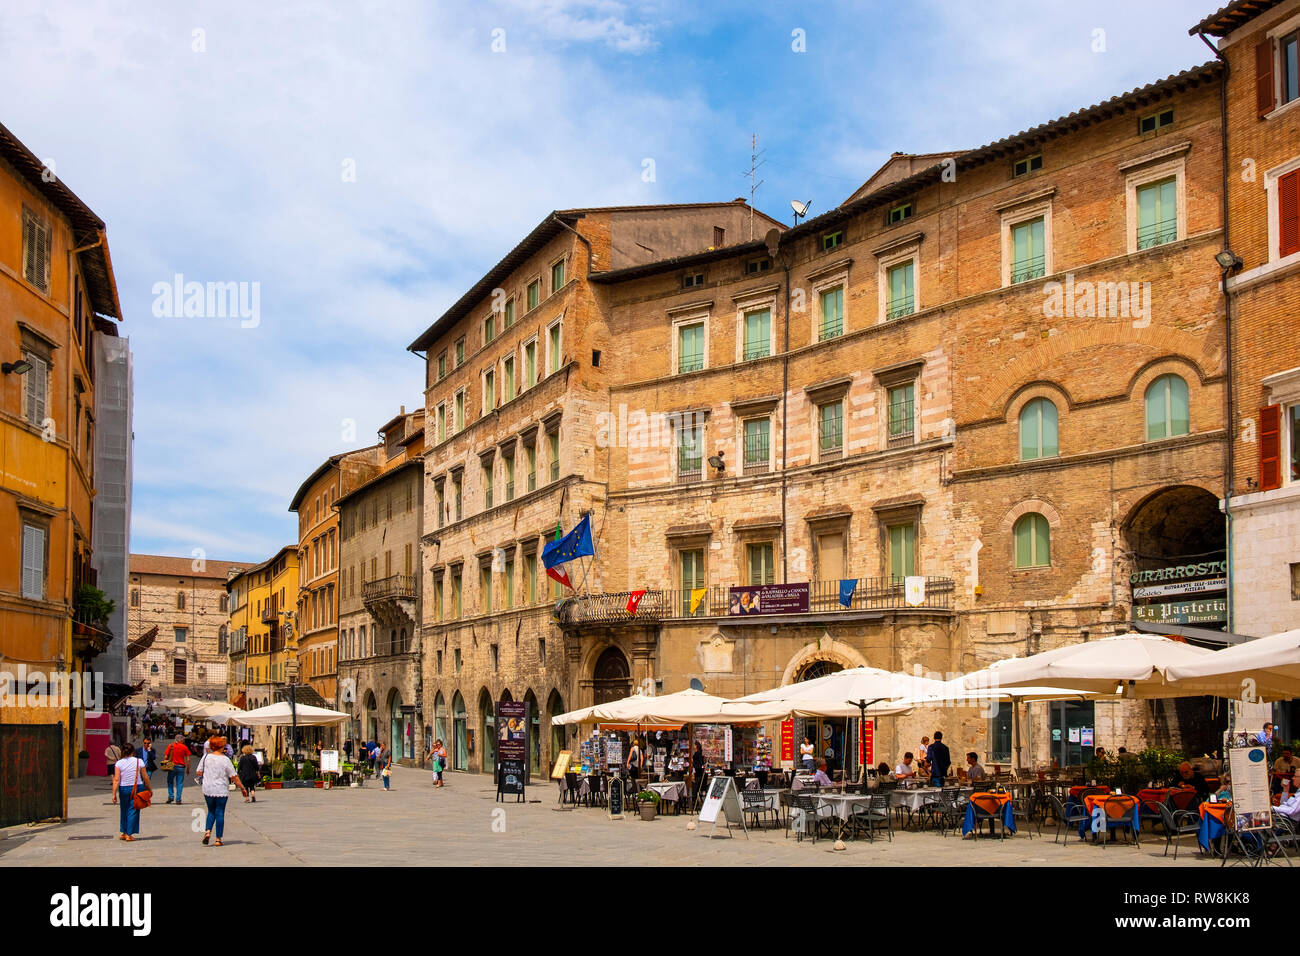 Perugia, Umbria / Italy - 2018/05/28: Panoramic view of the Corso Pietro Vannucci street - main boulevard of the Perugia historic quarter Stock Photo